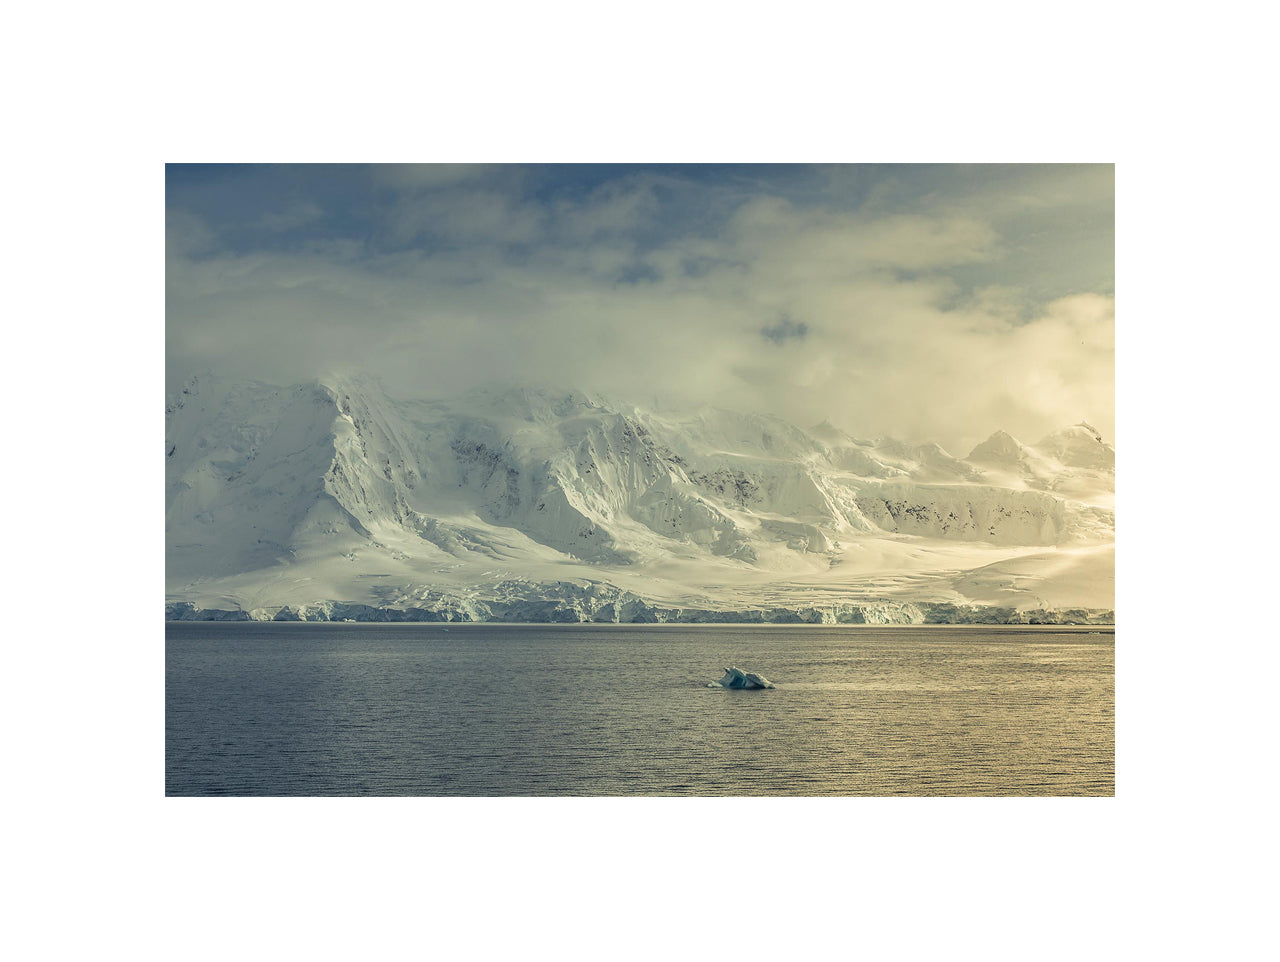 Antarctica IV, 2017